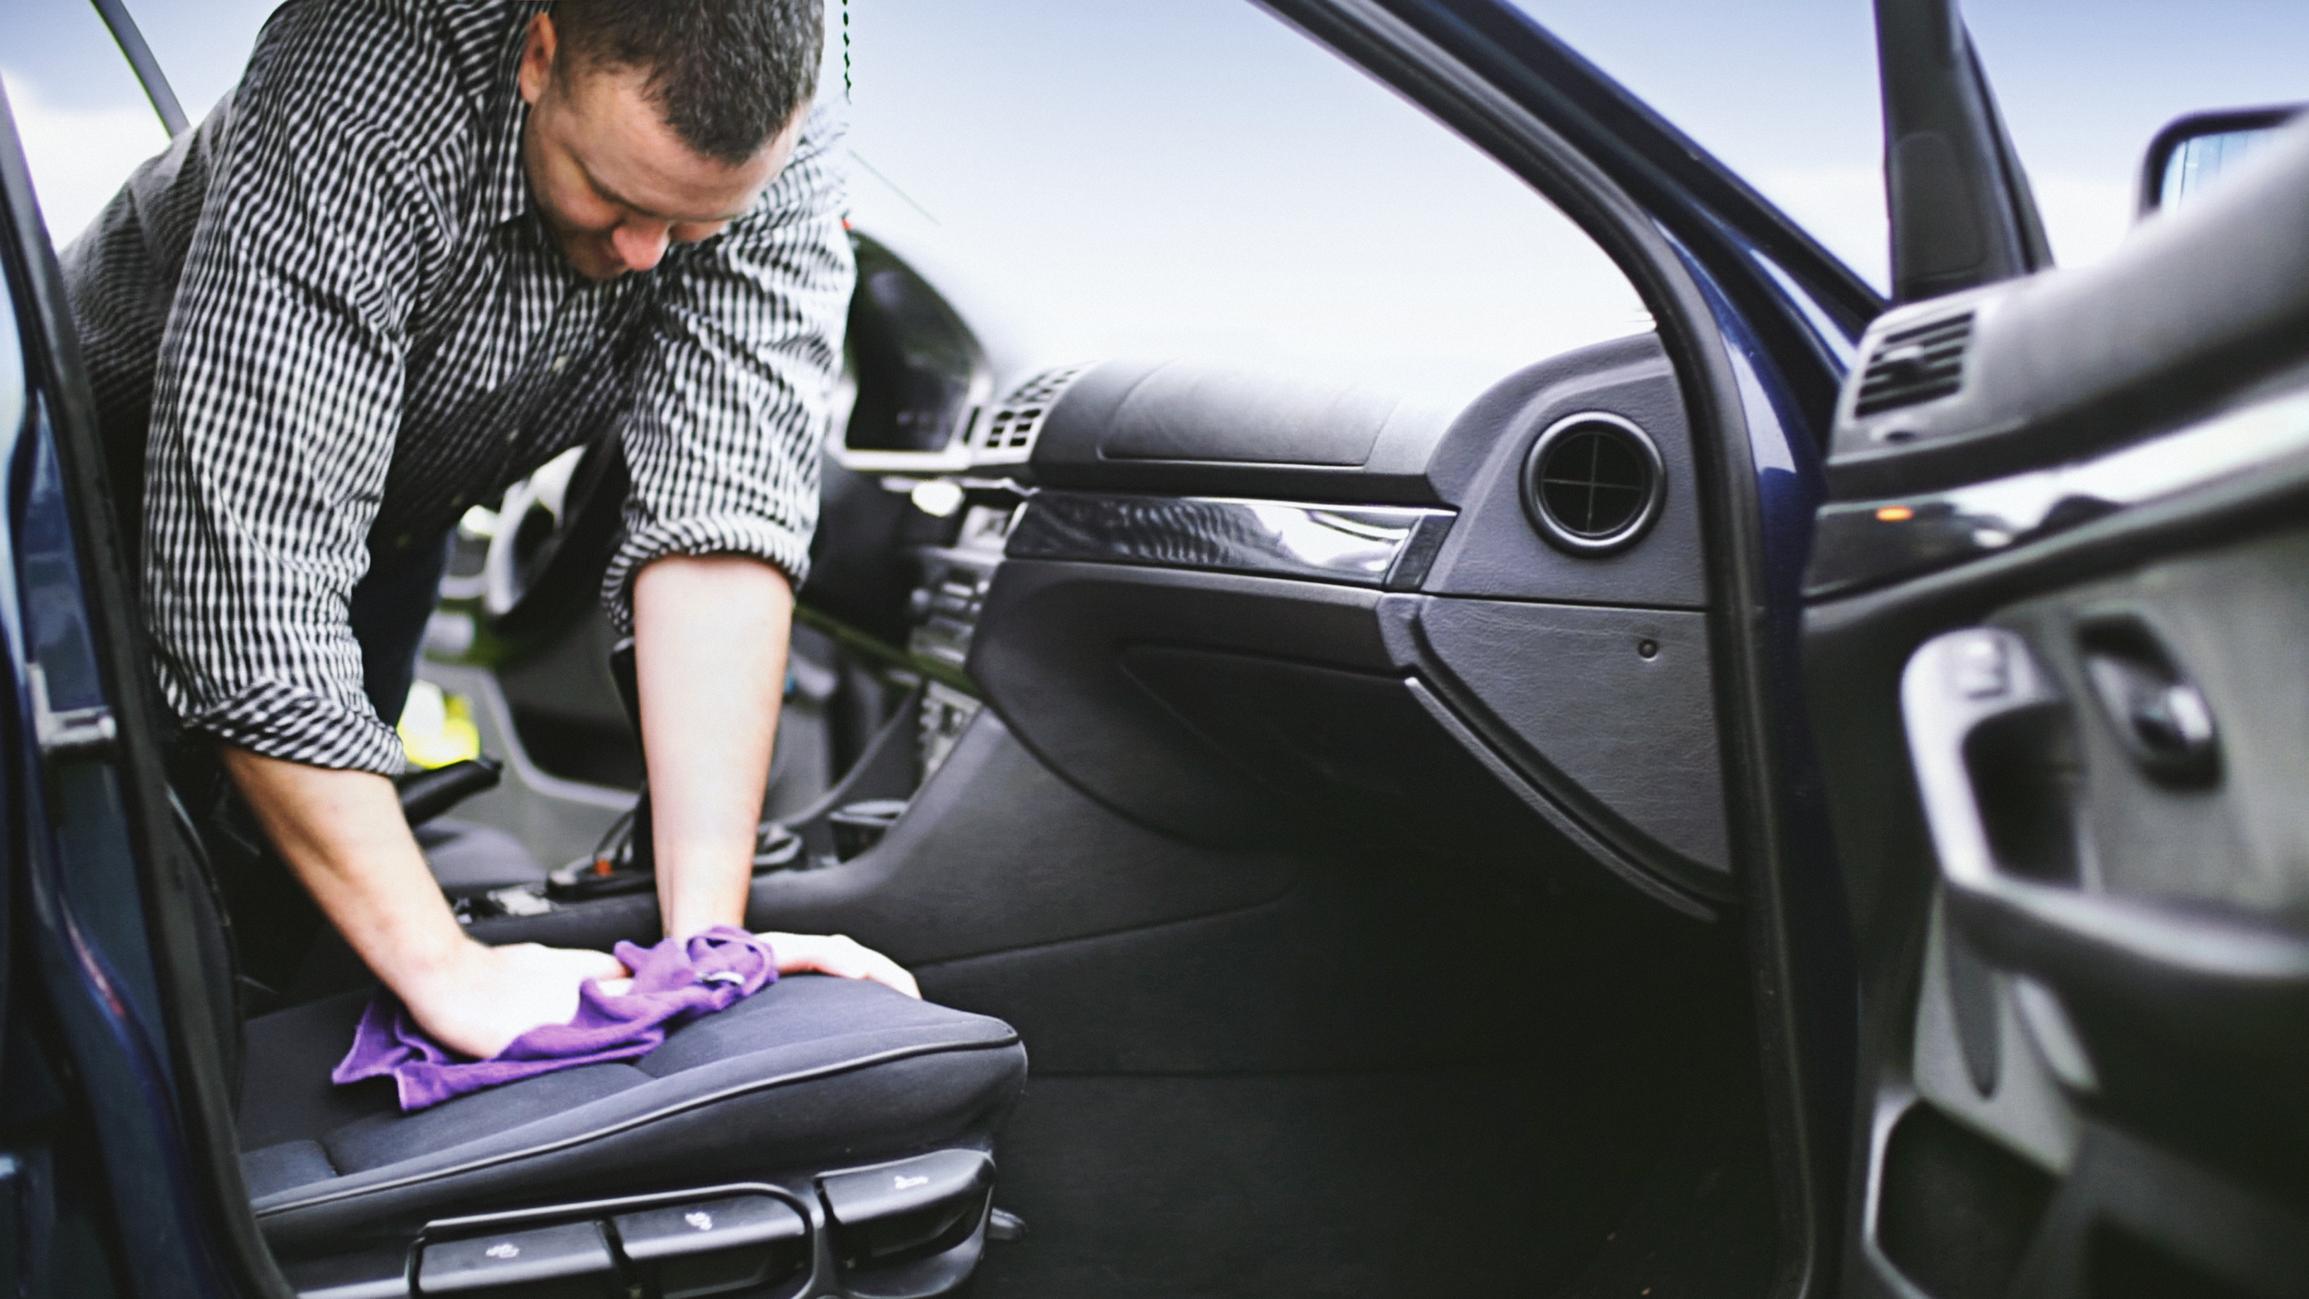 A man polishing the seats of a car with a purple cloth